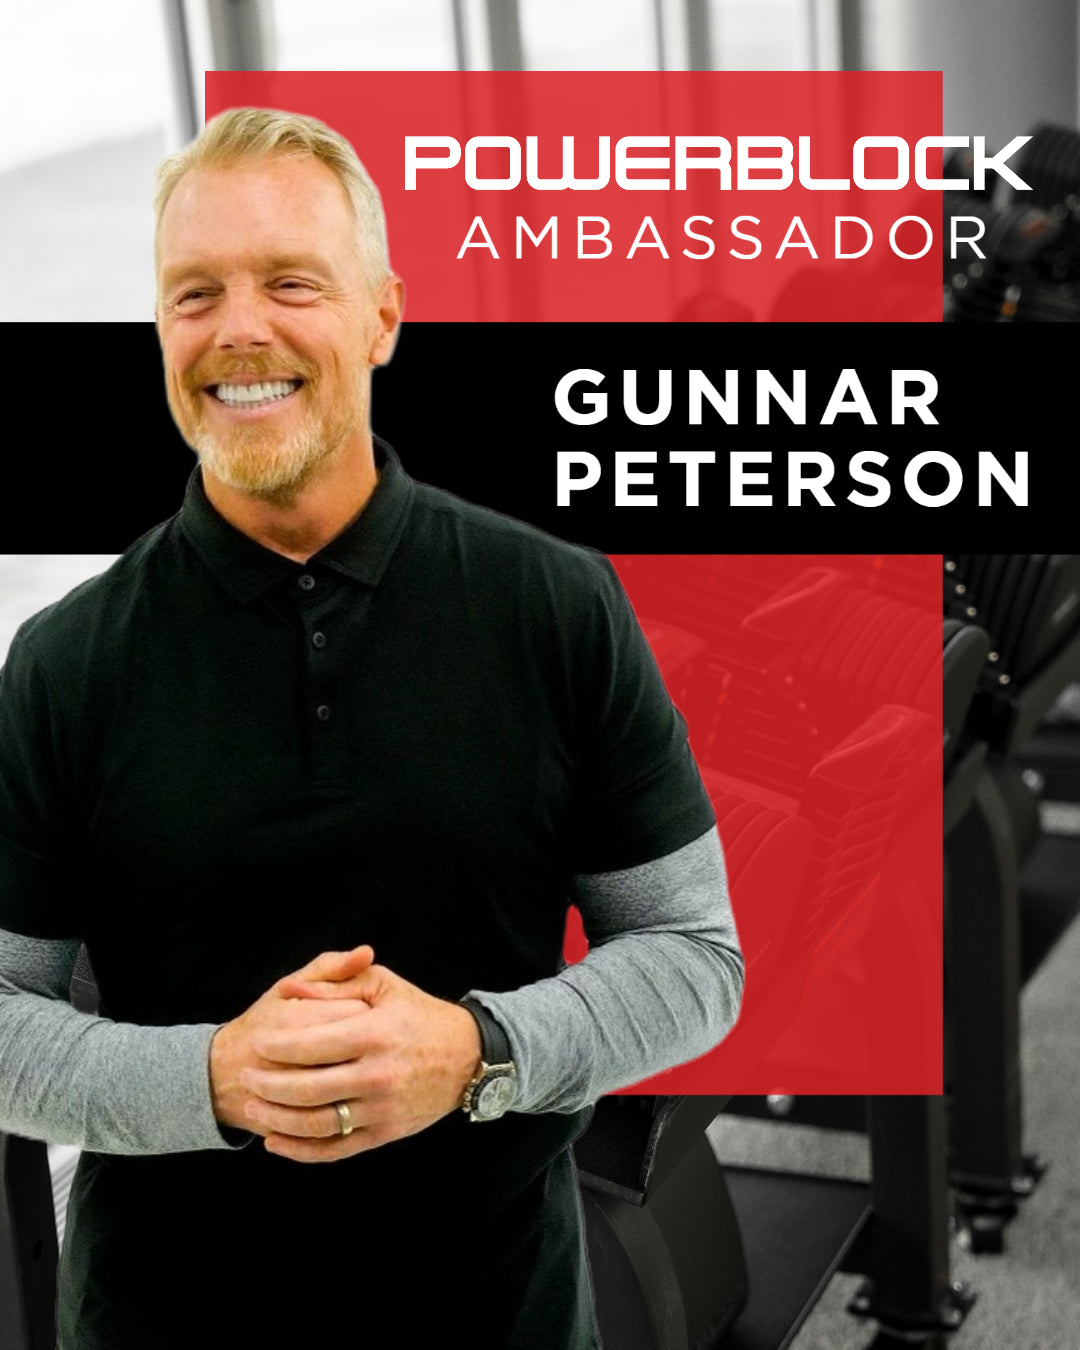 PowerBlock ambassador Gunnar Peterson smiling